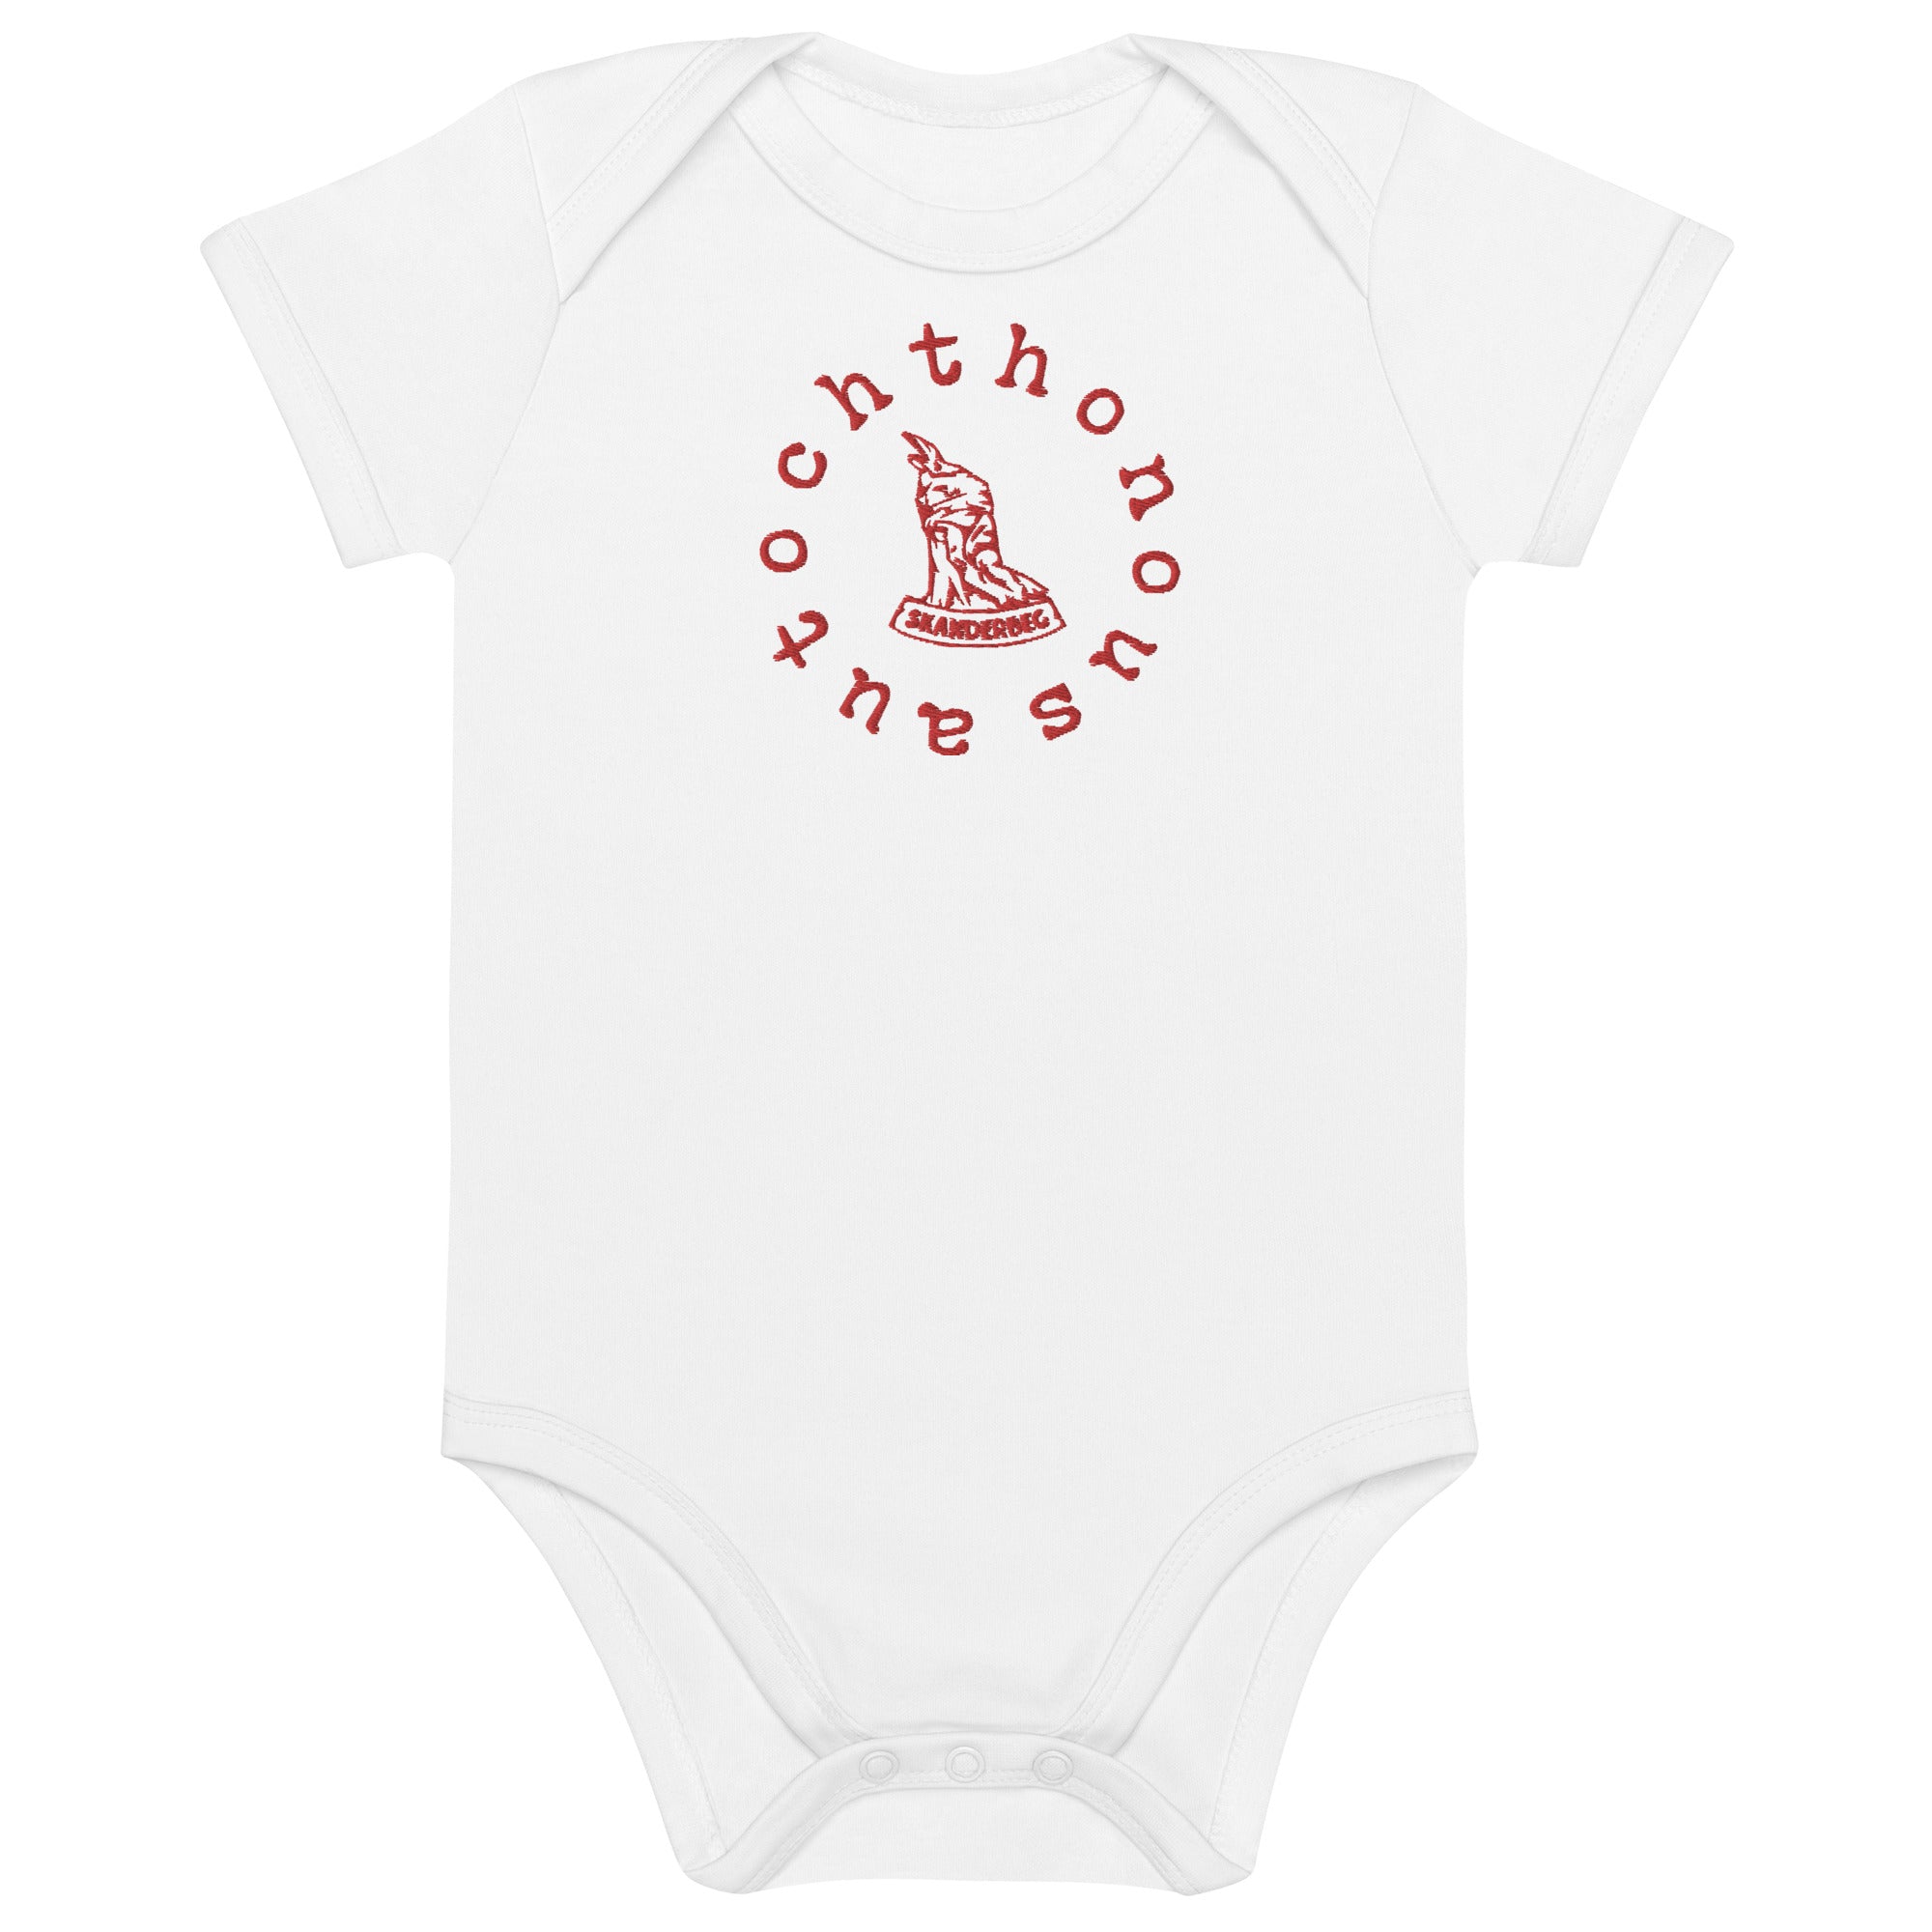 Skanderbeg Autochthonous Organic cotton baby bodysuit